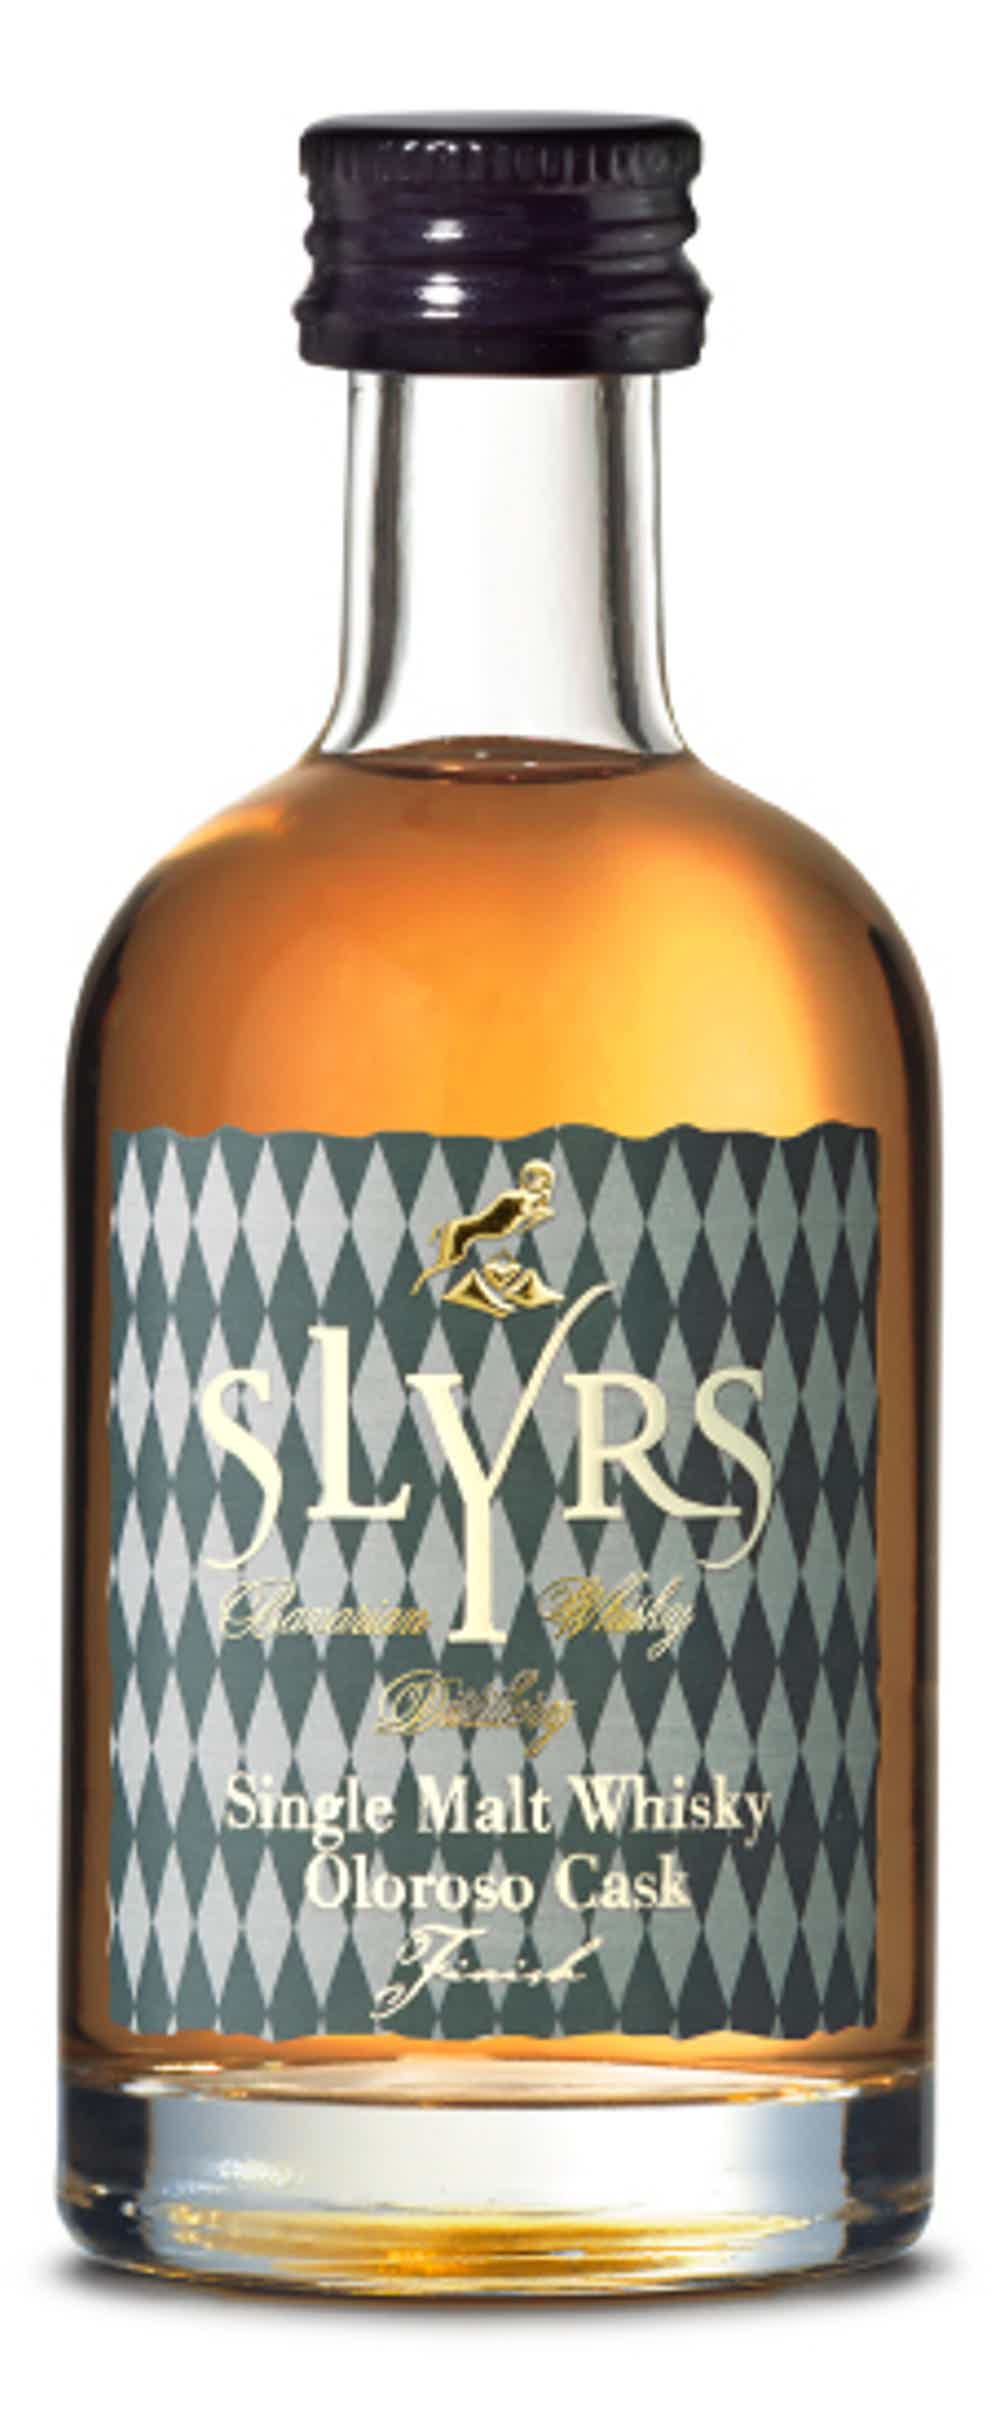 SLYRS Single Malt Whisky Oloroso Cask Finish 46% vol. 46.0% 0.05L, Spirits